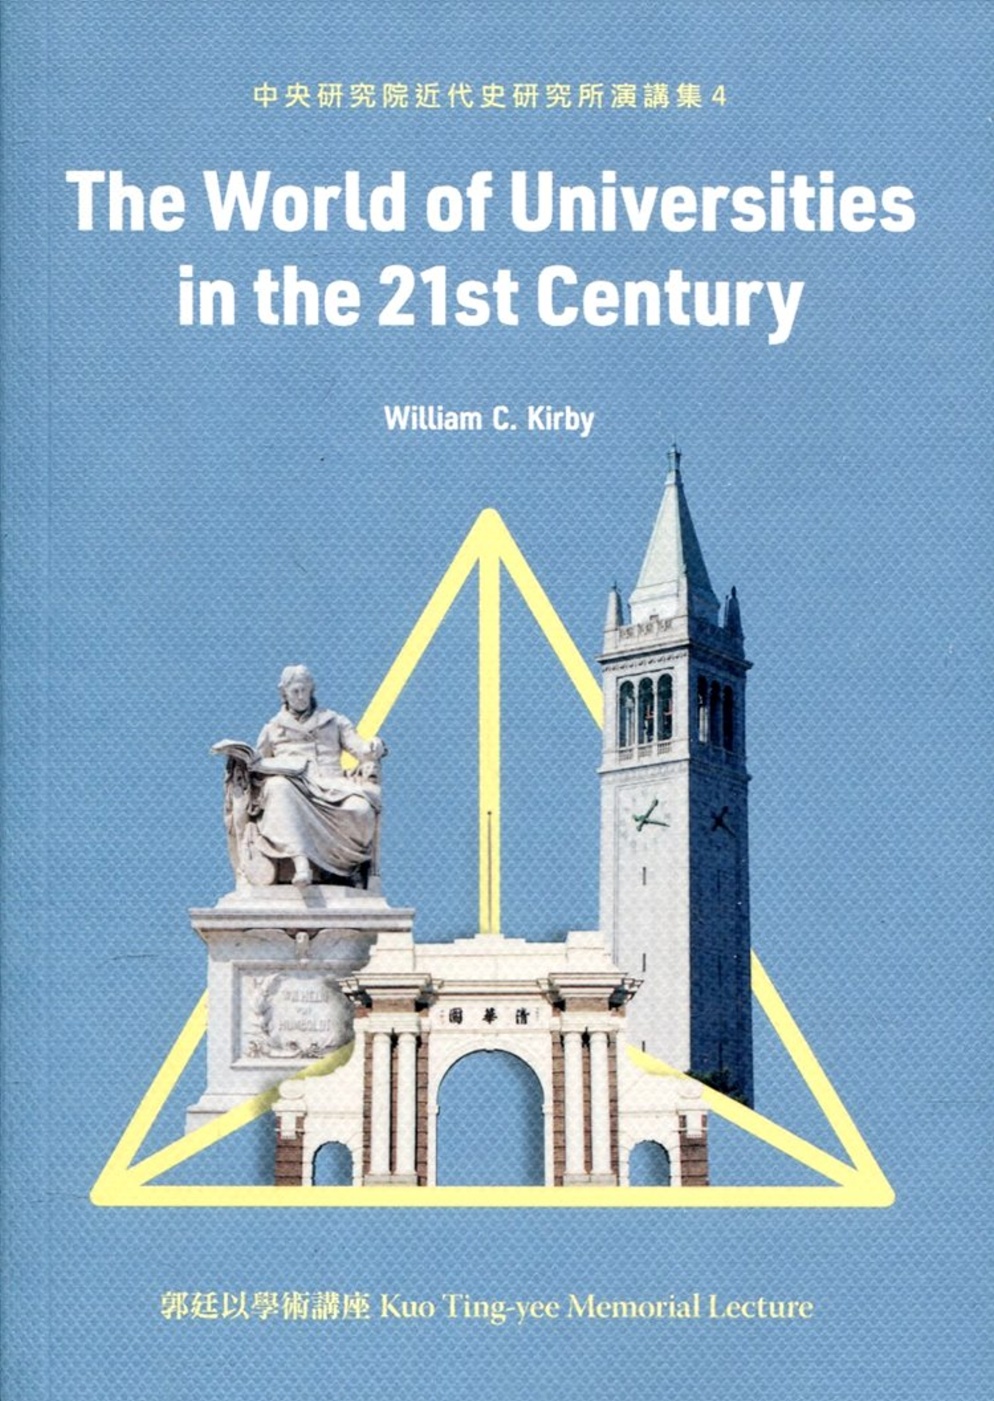 The World of Universities in the 21st Century(中央研究院近代史研究所演講集4)